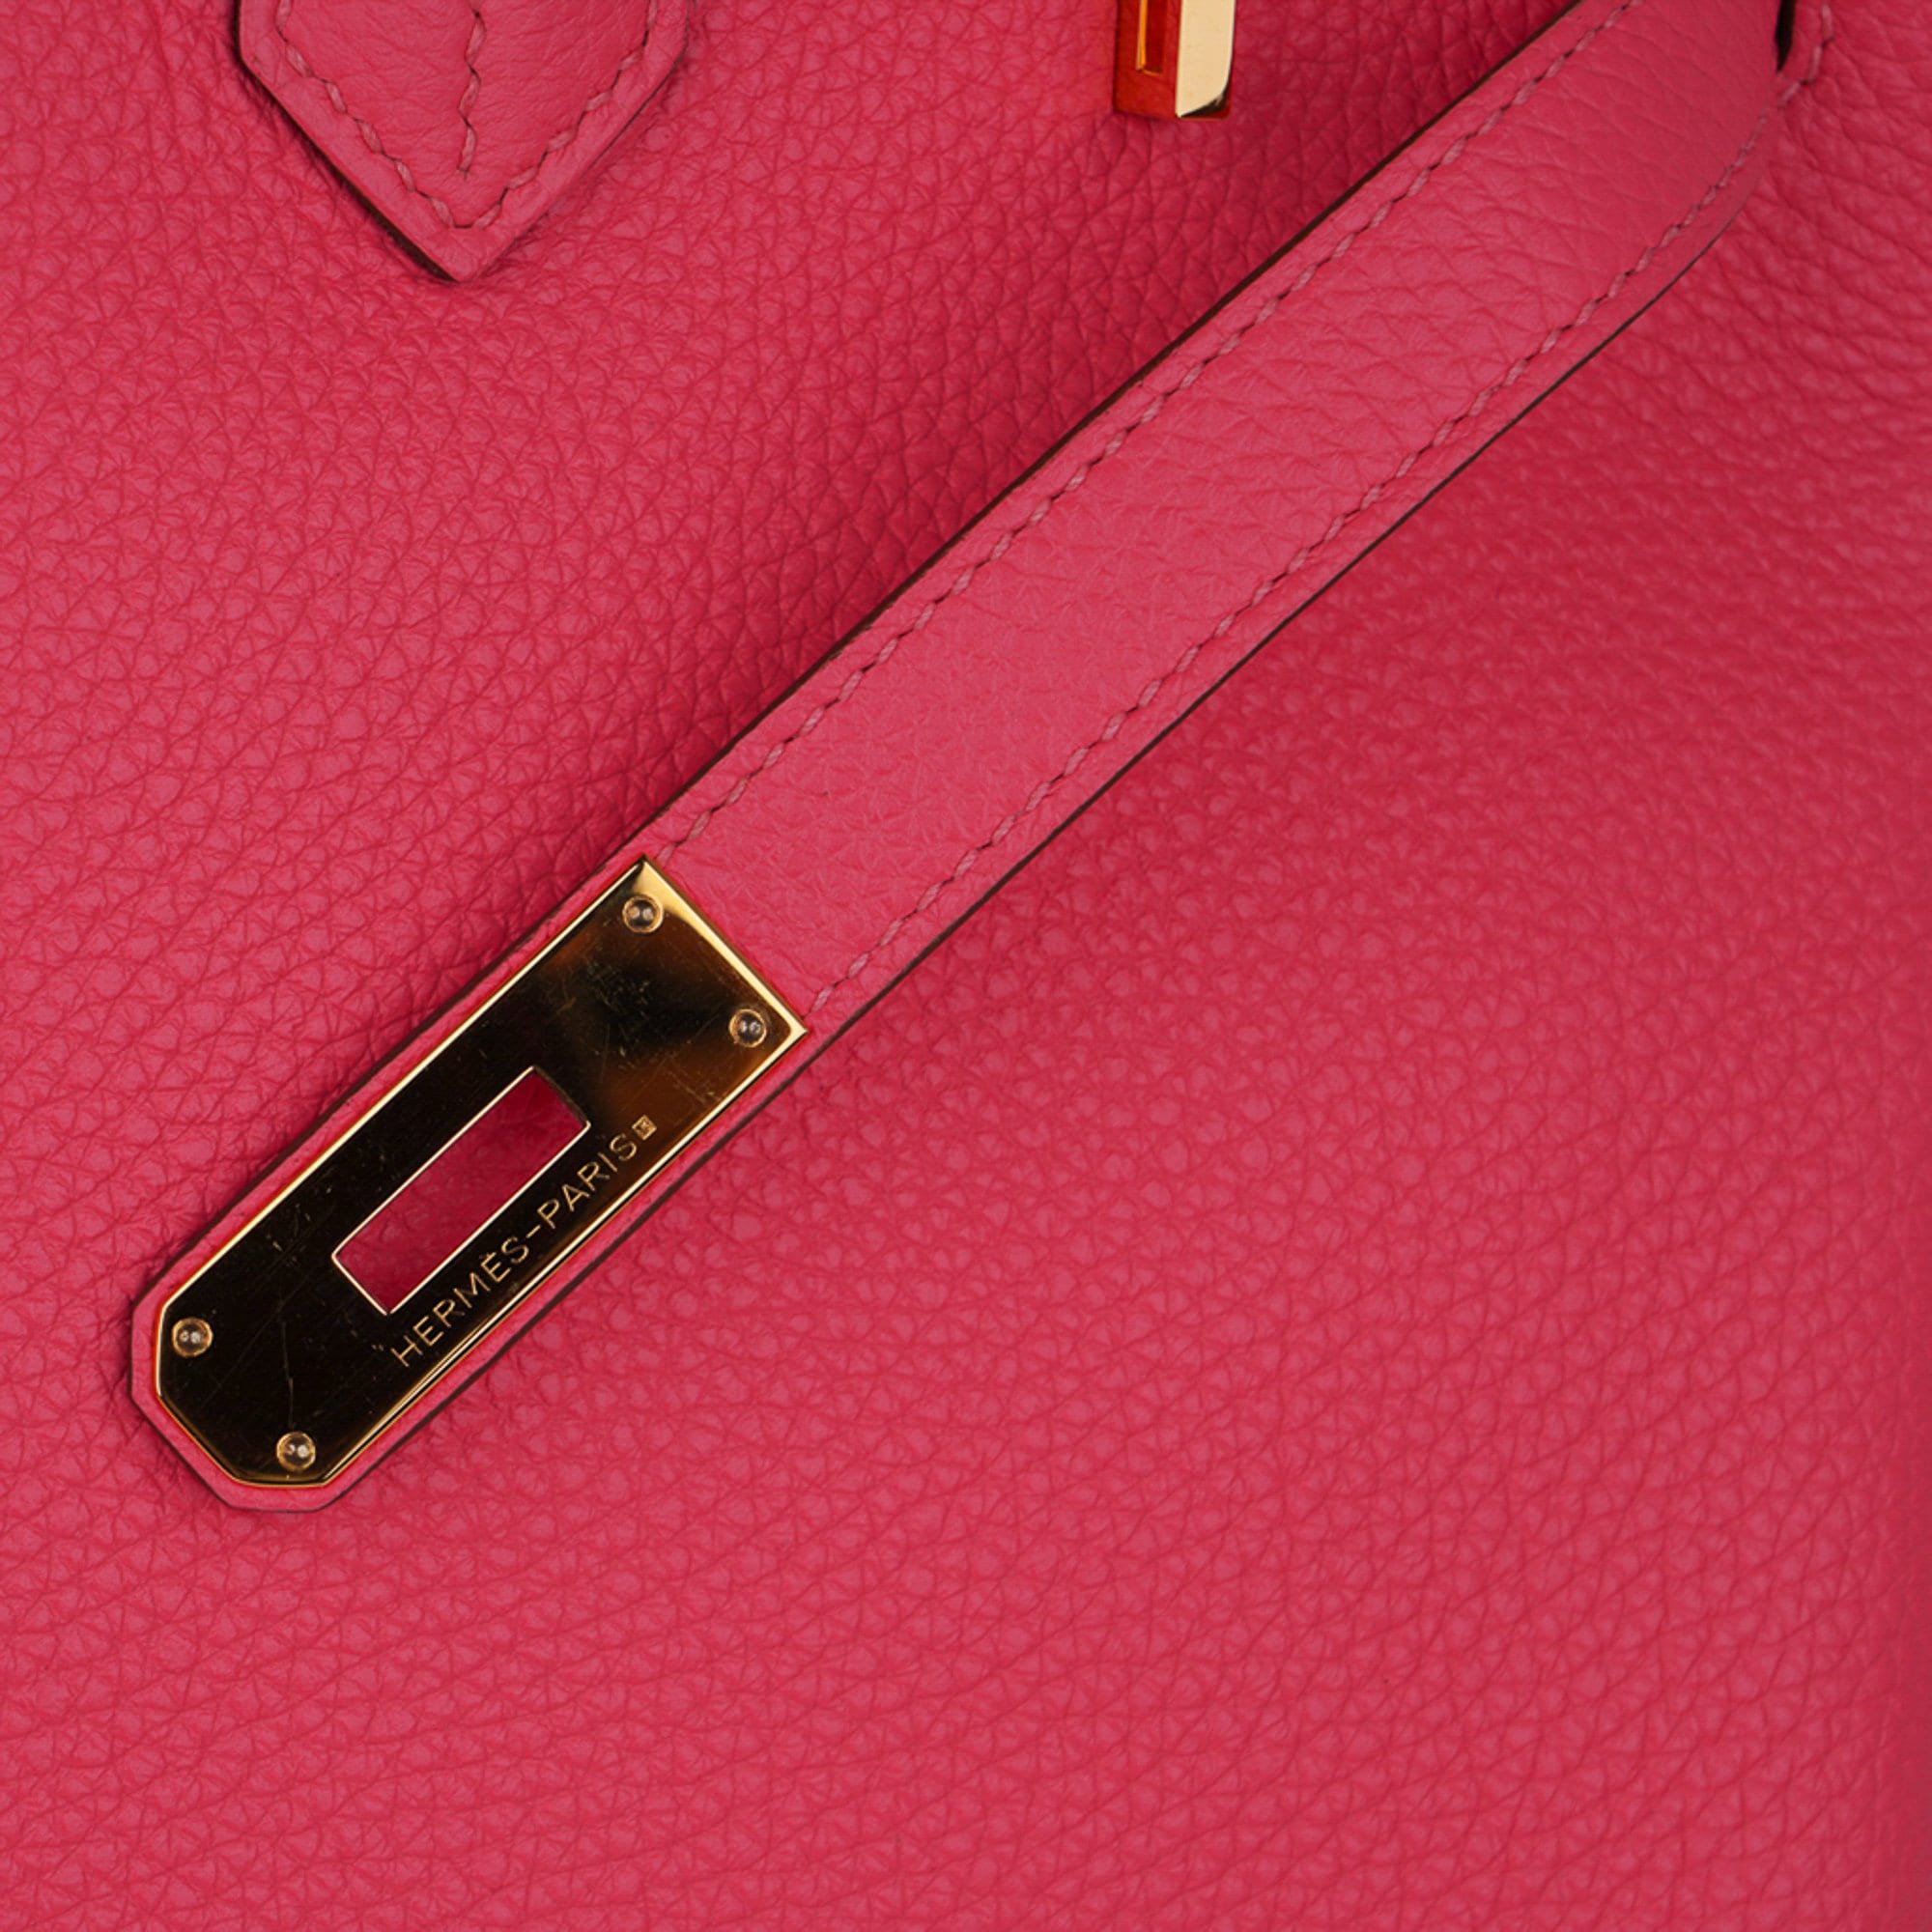 Hermes Birkin 35 Bag Rose Lipstick Pink Togo Gold Hardware – Mightychic